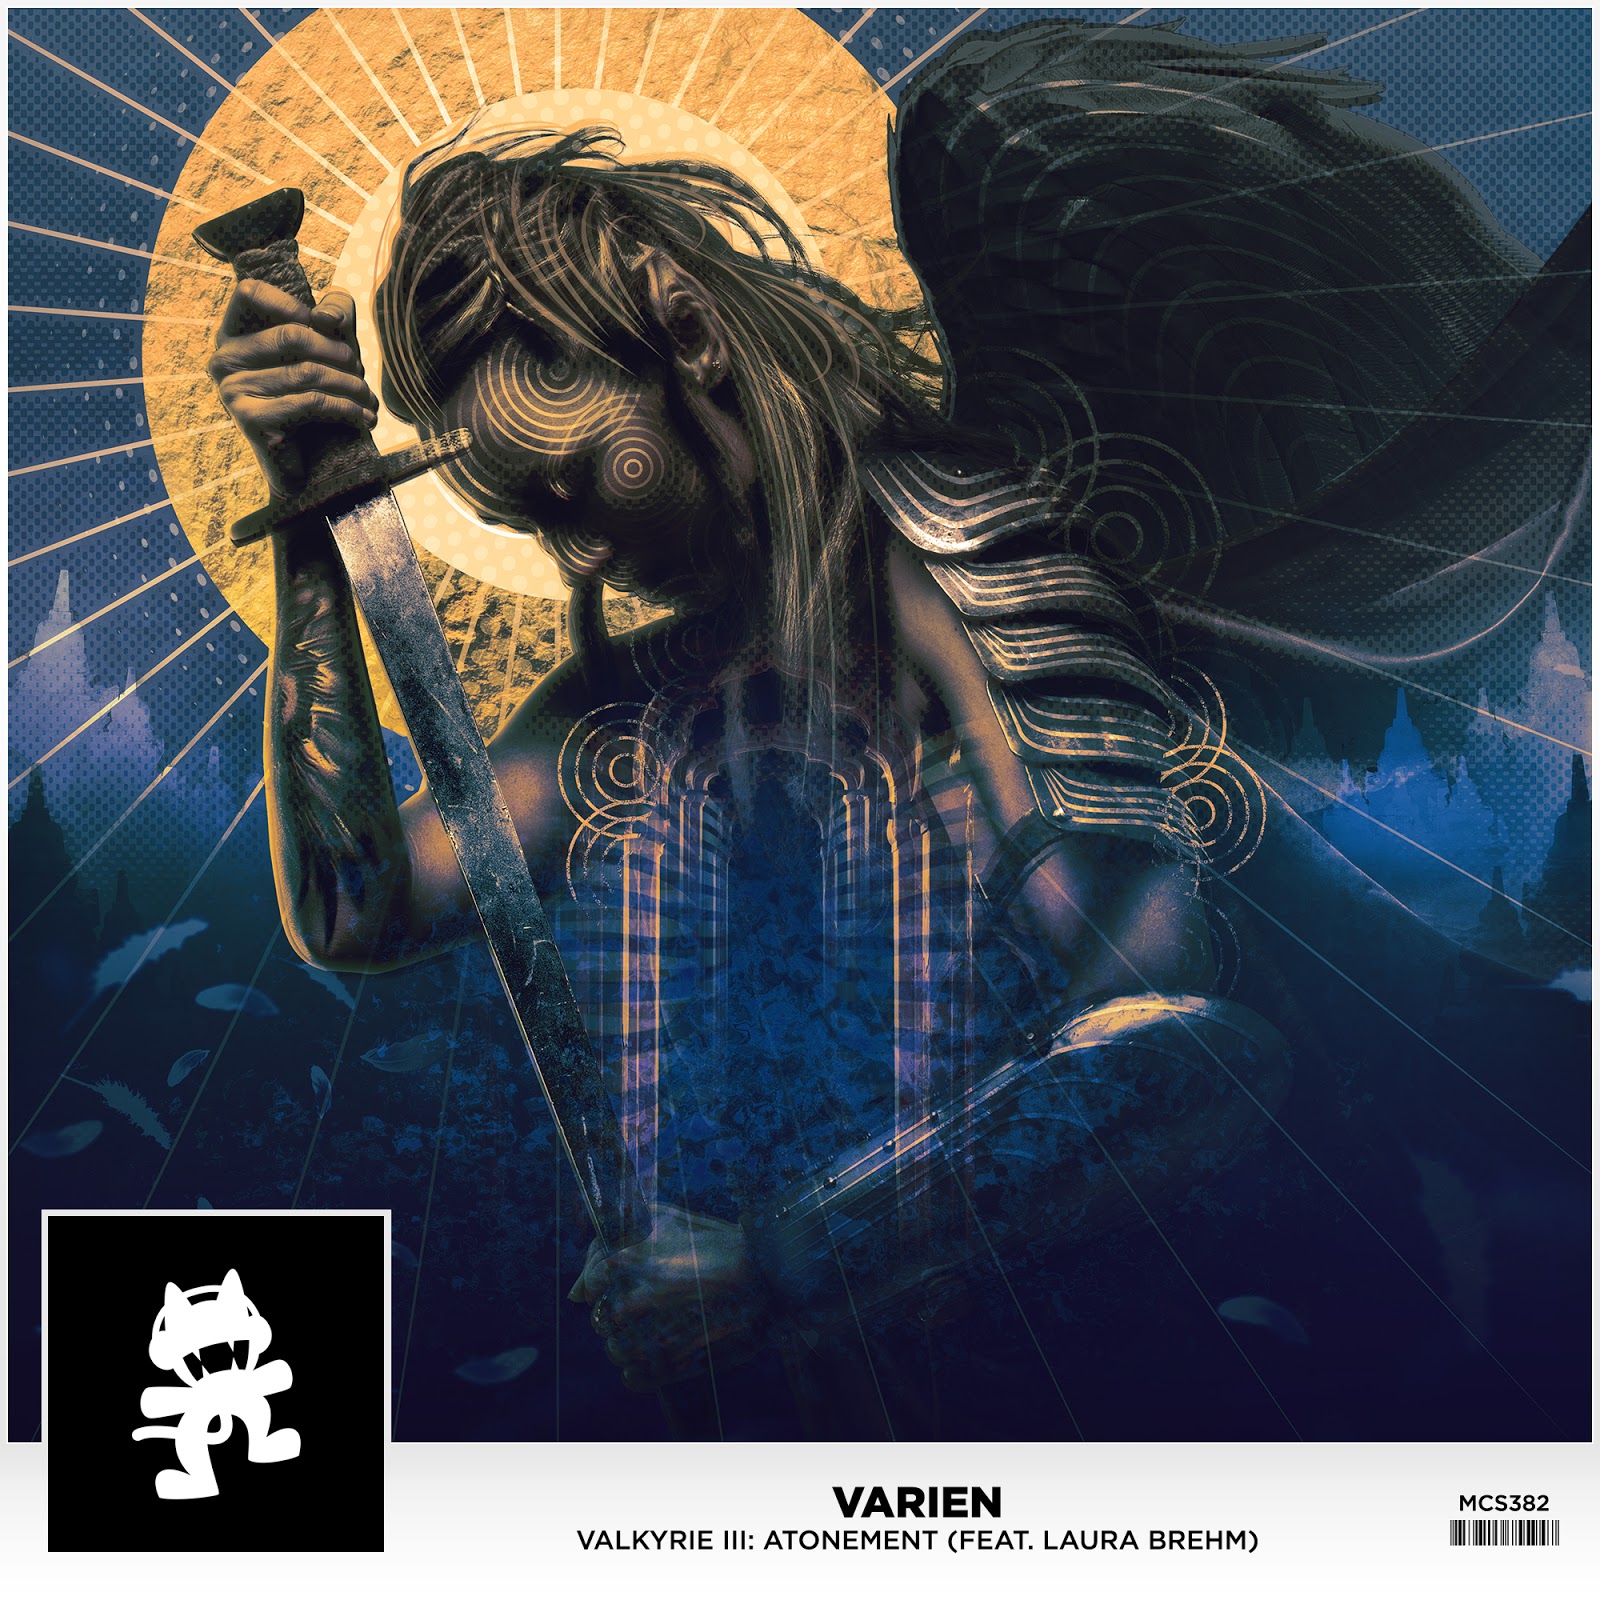 Varien - Valkyrie III Atonement (feat. Laura Brehm) (Art)